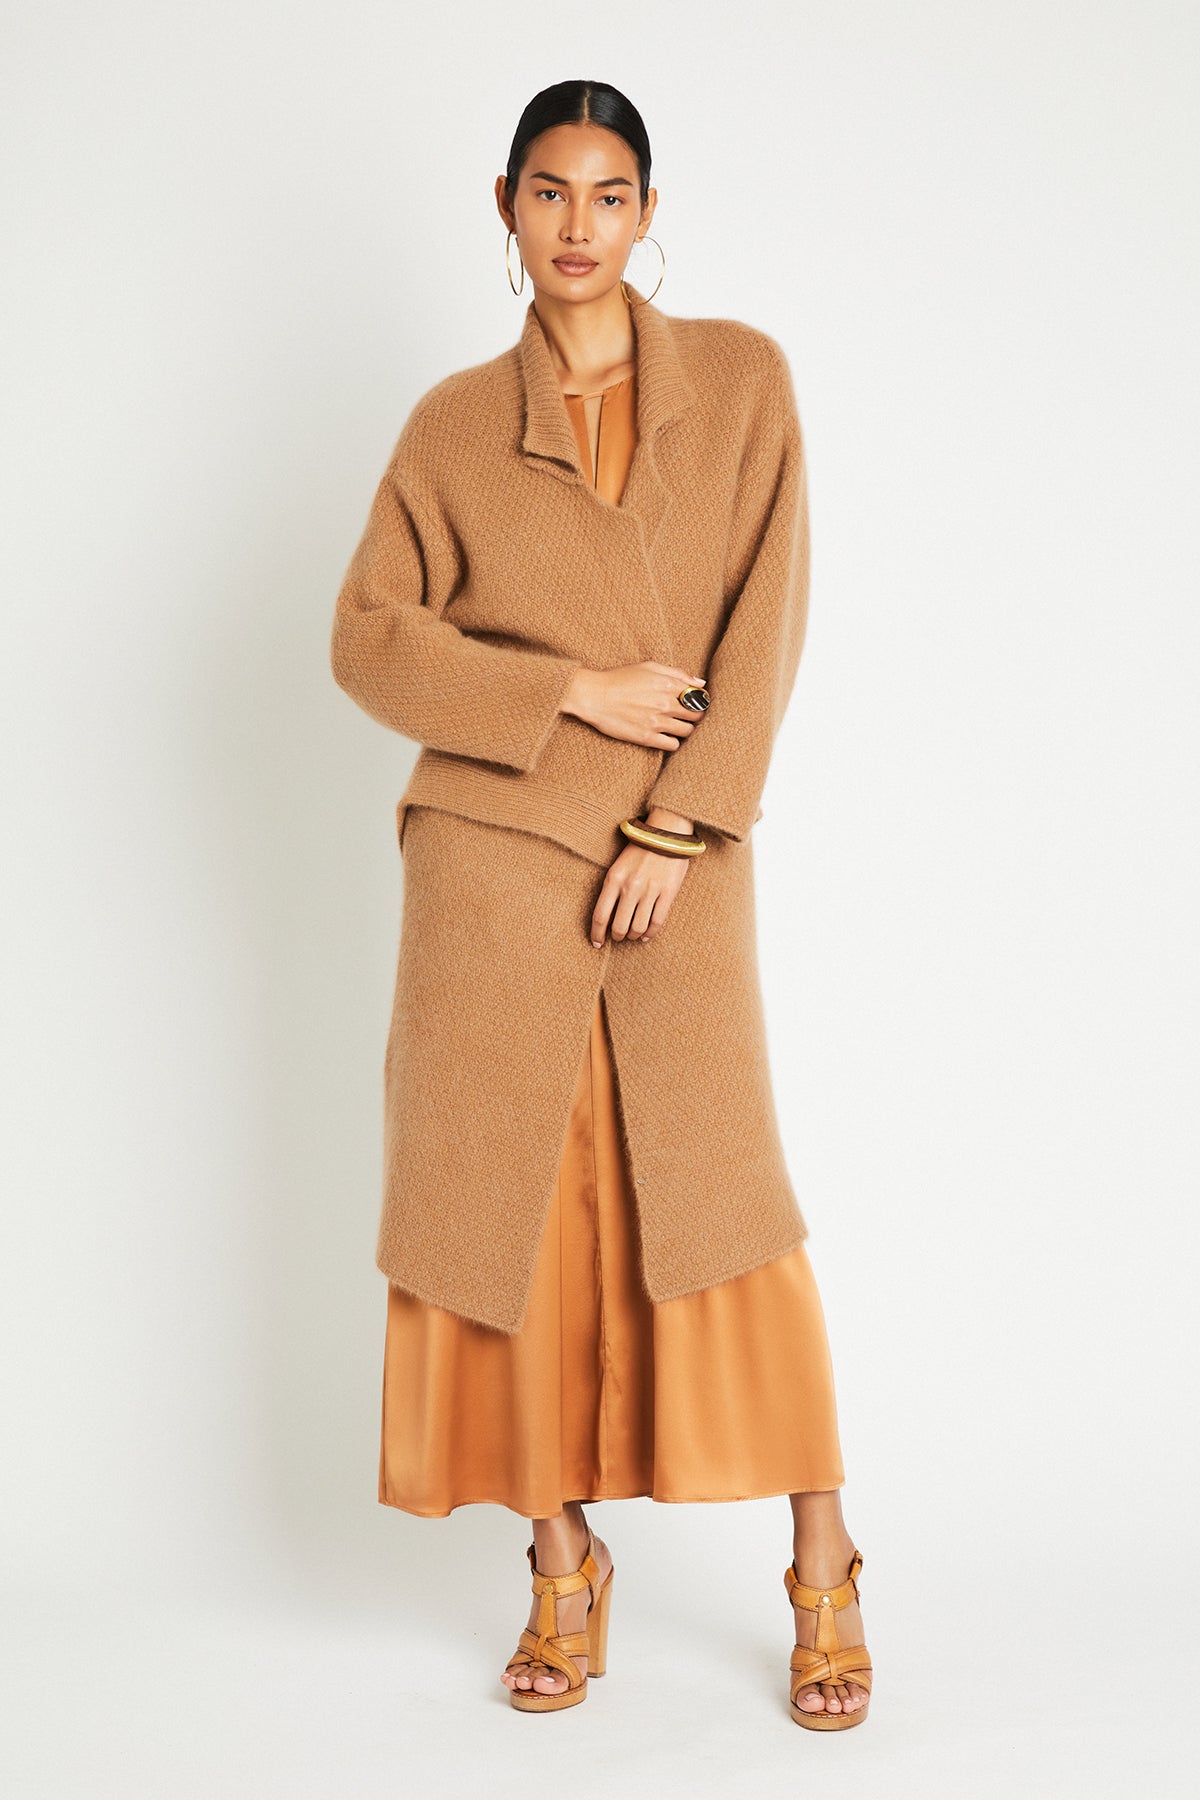 +Beryll Cashmere Coat Marianne | Camel - +Beryll Marianne Coat | Camel - +Beryll Worn By Good People